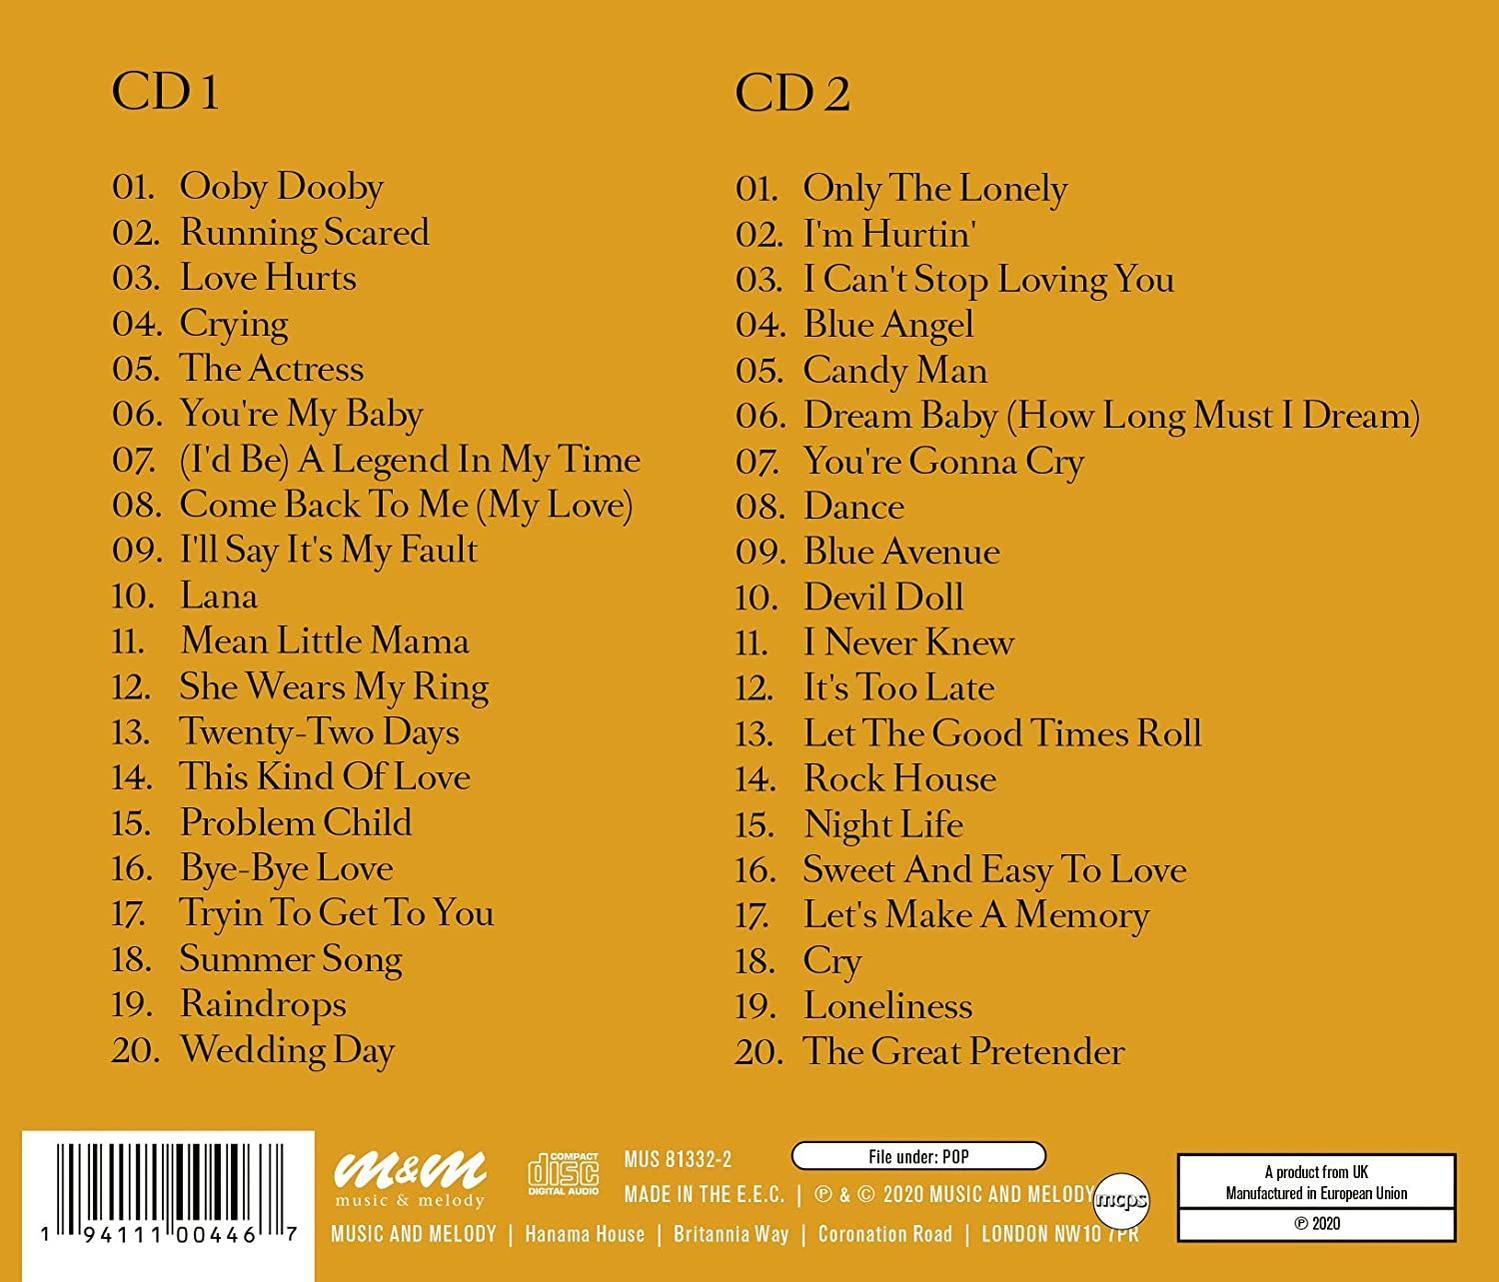 Roy Orbison - 40 Greatest Hits (CD) 